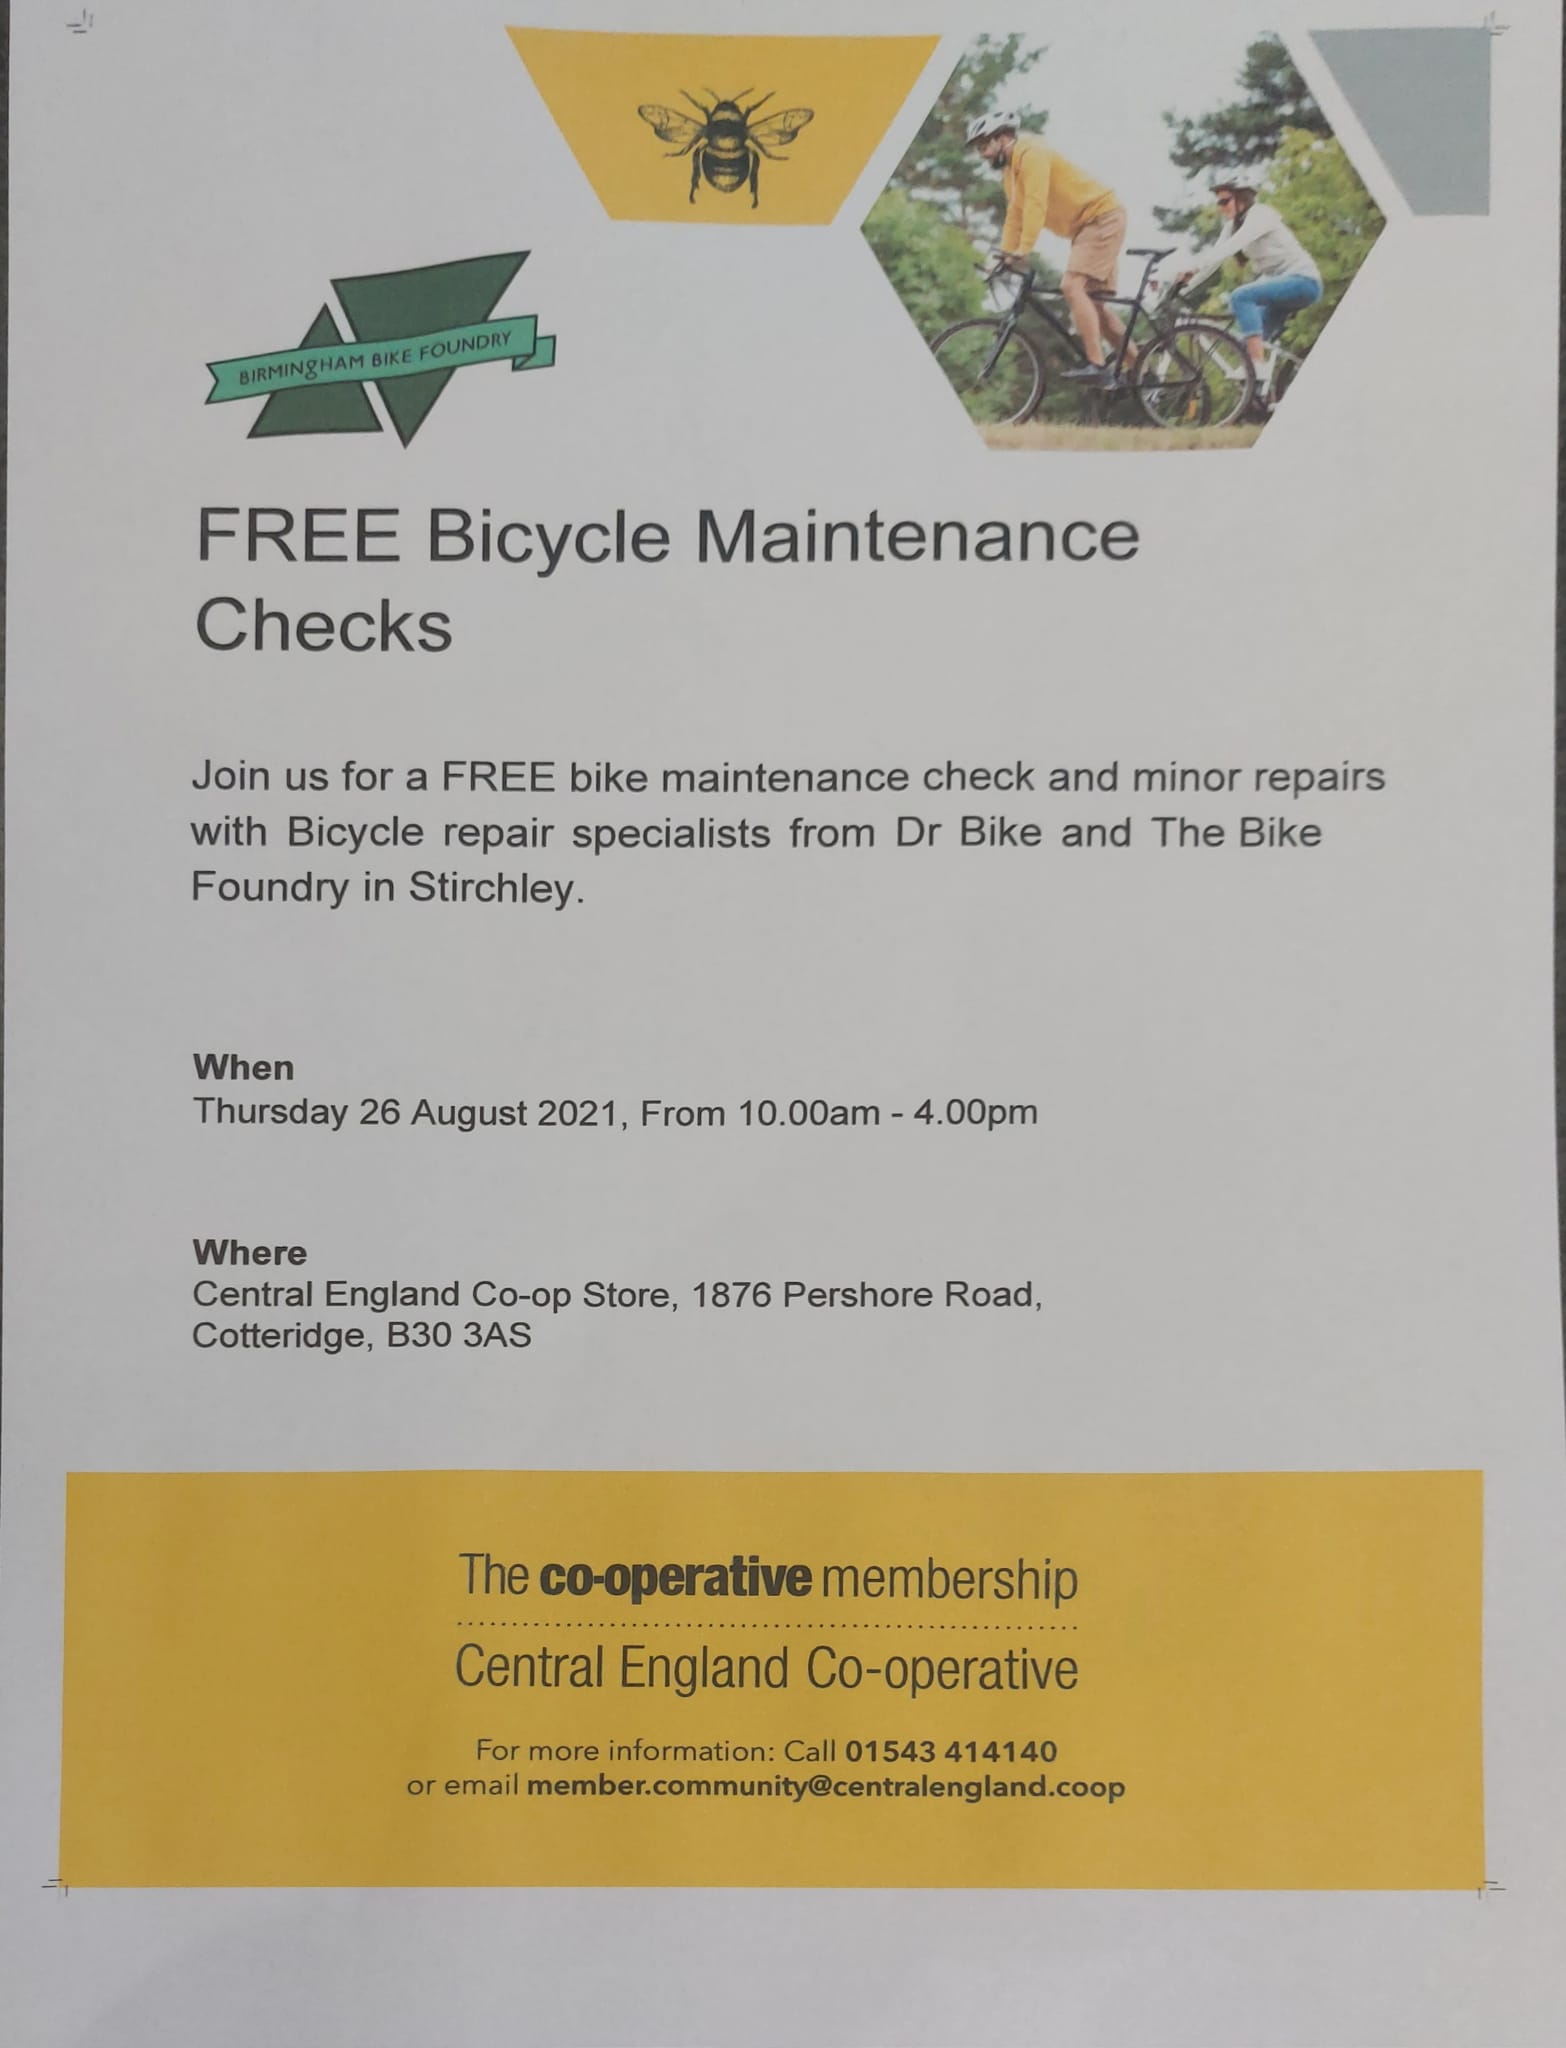 FREE Bike Maintenance Event in Cotteridge, Birmingham